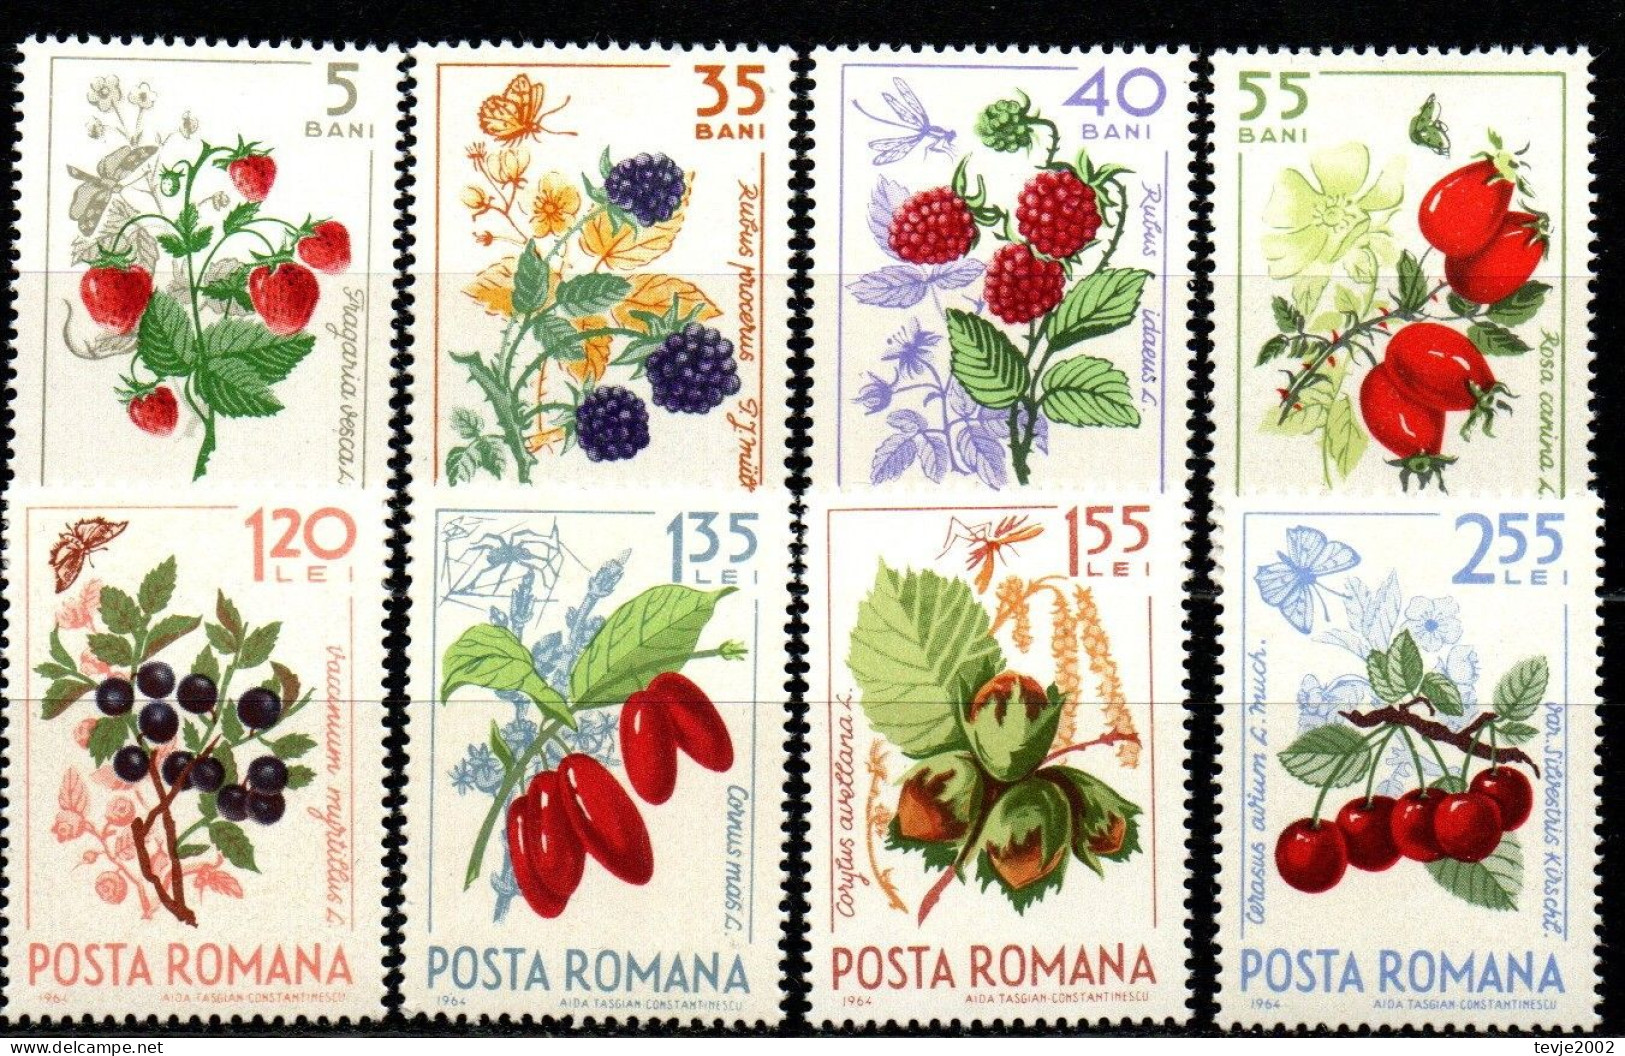 Rumänien 1964 - Mi.Nr. 2361 - 2368 - Postfrisch MNH - Früchte Fruits Beeren Berries - Fruit